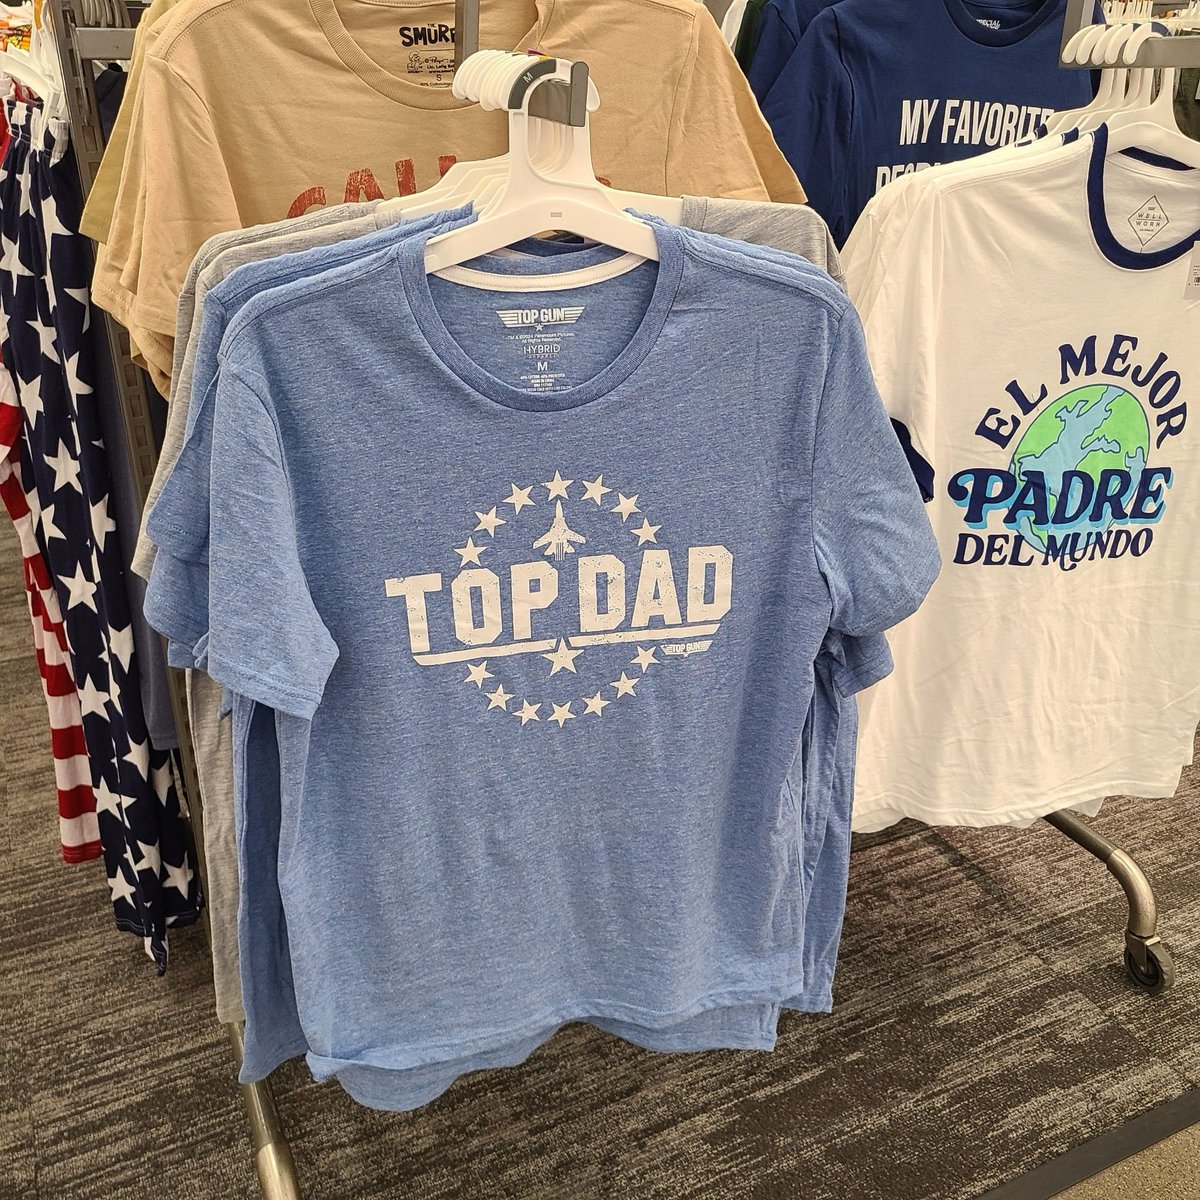 Target says it’s no longer selling pride merchandise, then explain this?